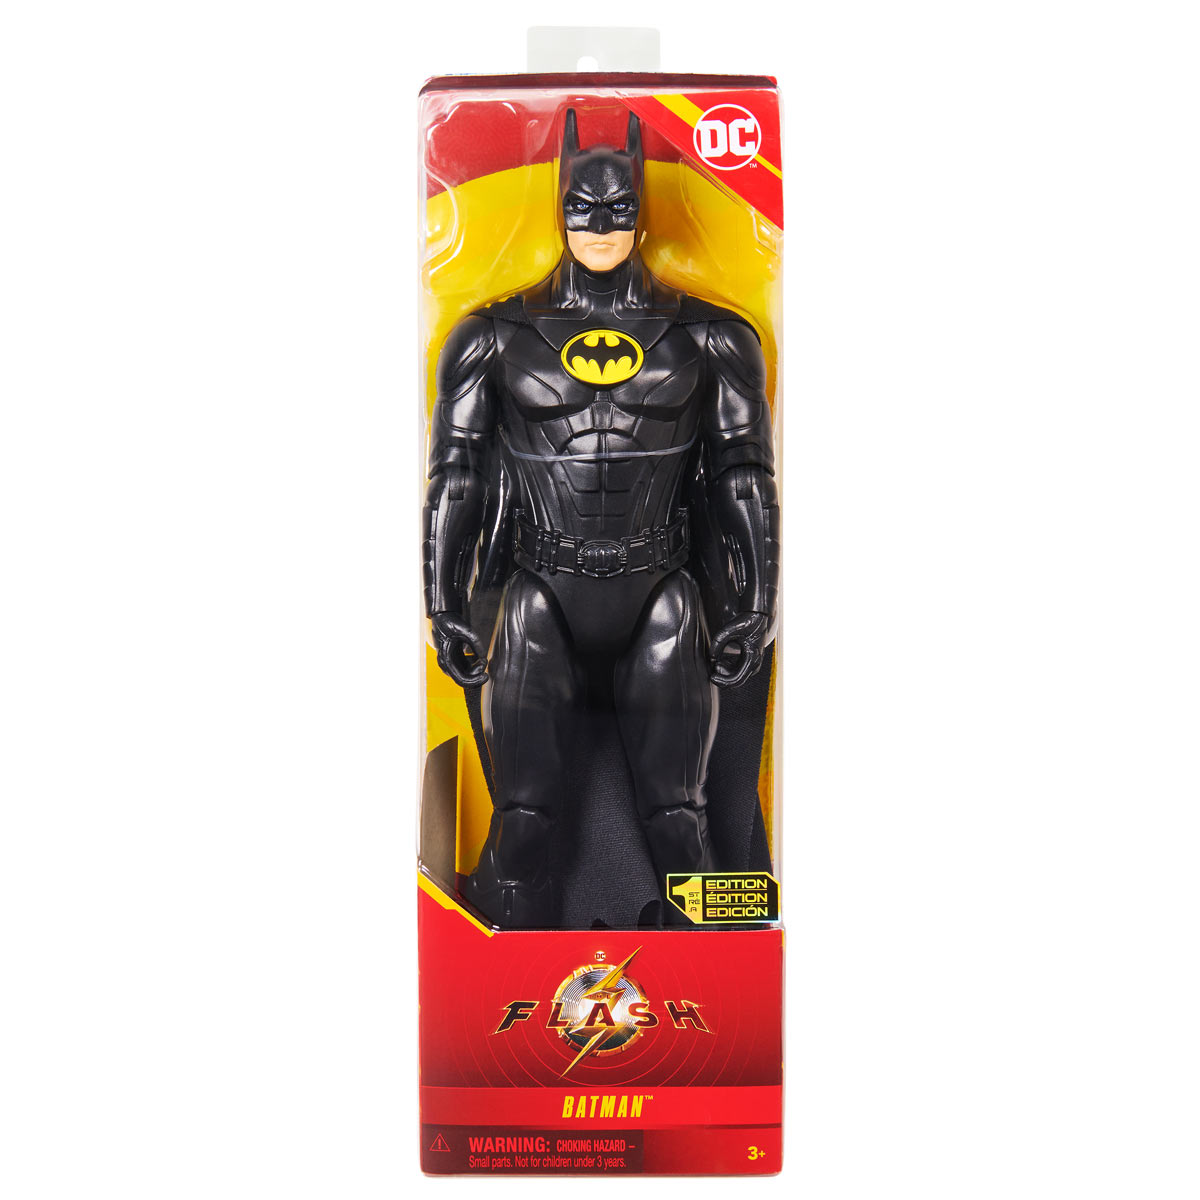 The Flash - Boneco de 30cm do Batman